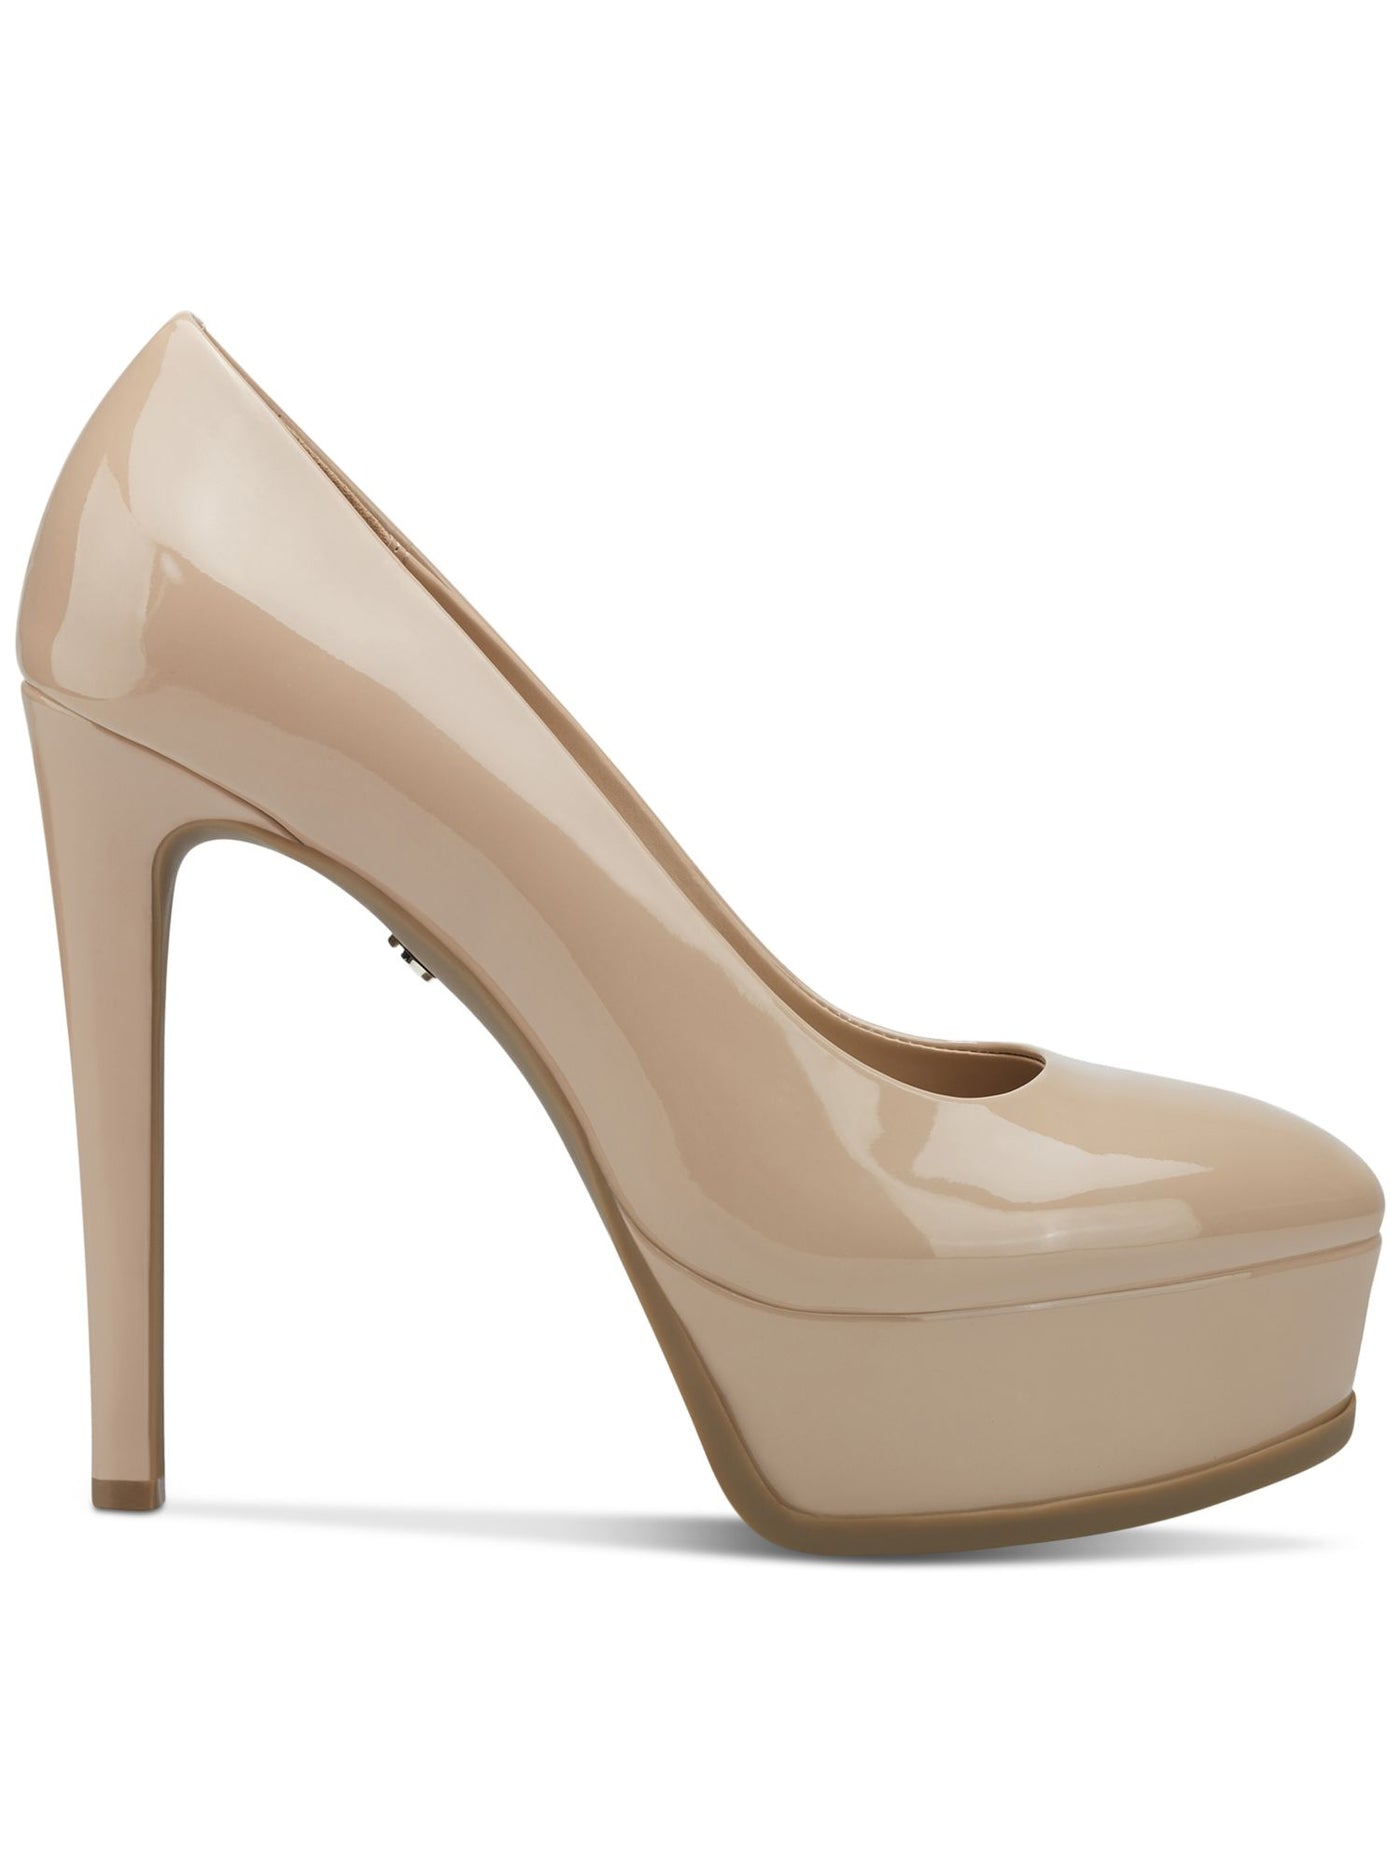 THALIA SODI Womens Beige 1-1/2" Platform Padded Stasia Almond Toe Stiletto Slip On Dress Pumps Shoes 8.5 M